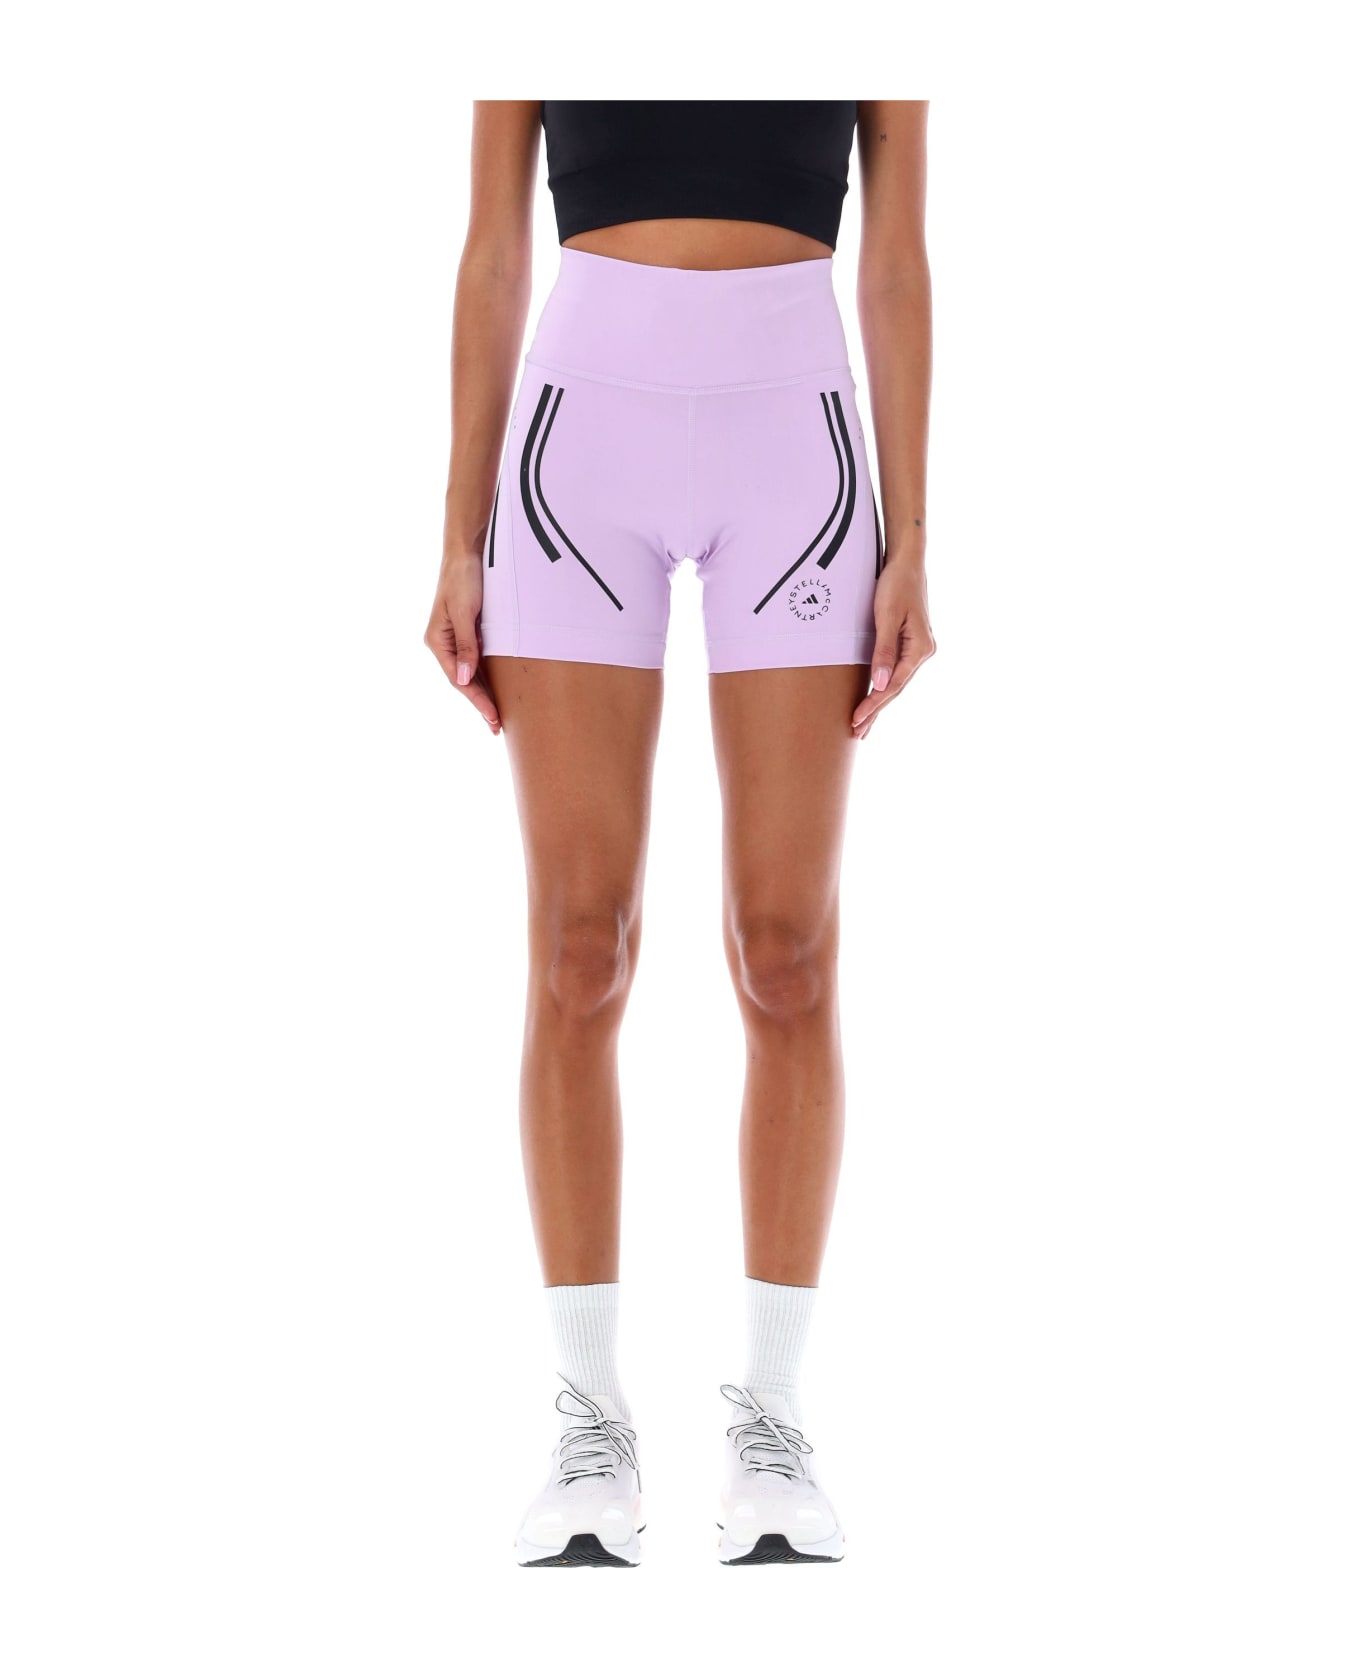 Adidas by Stella McCartney Active Shorts - PURPLE GLOW